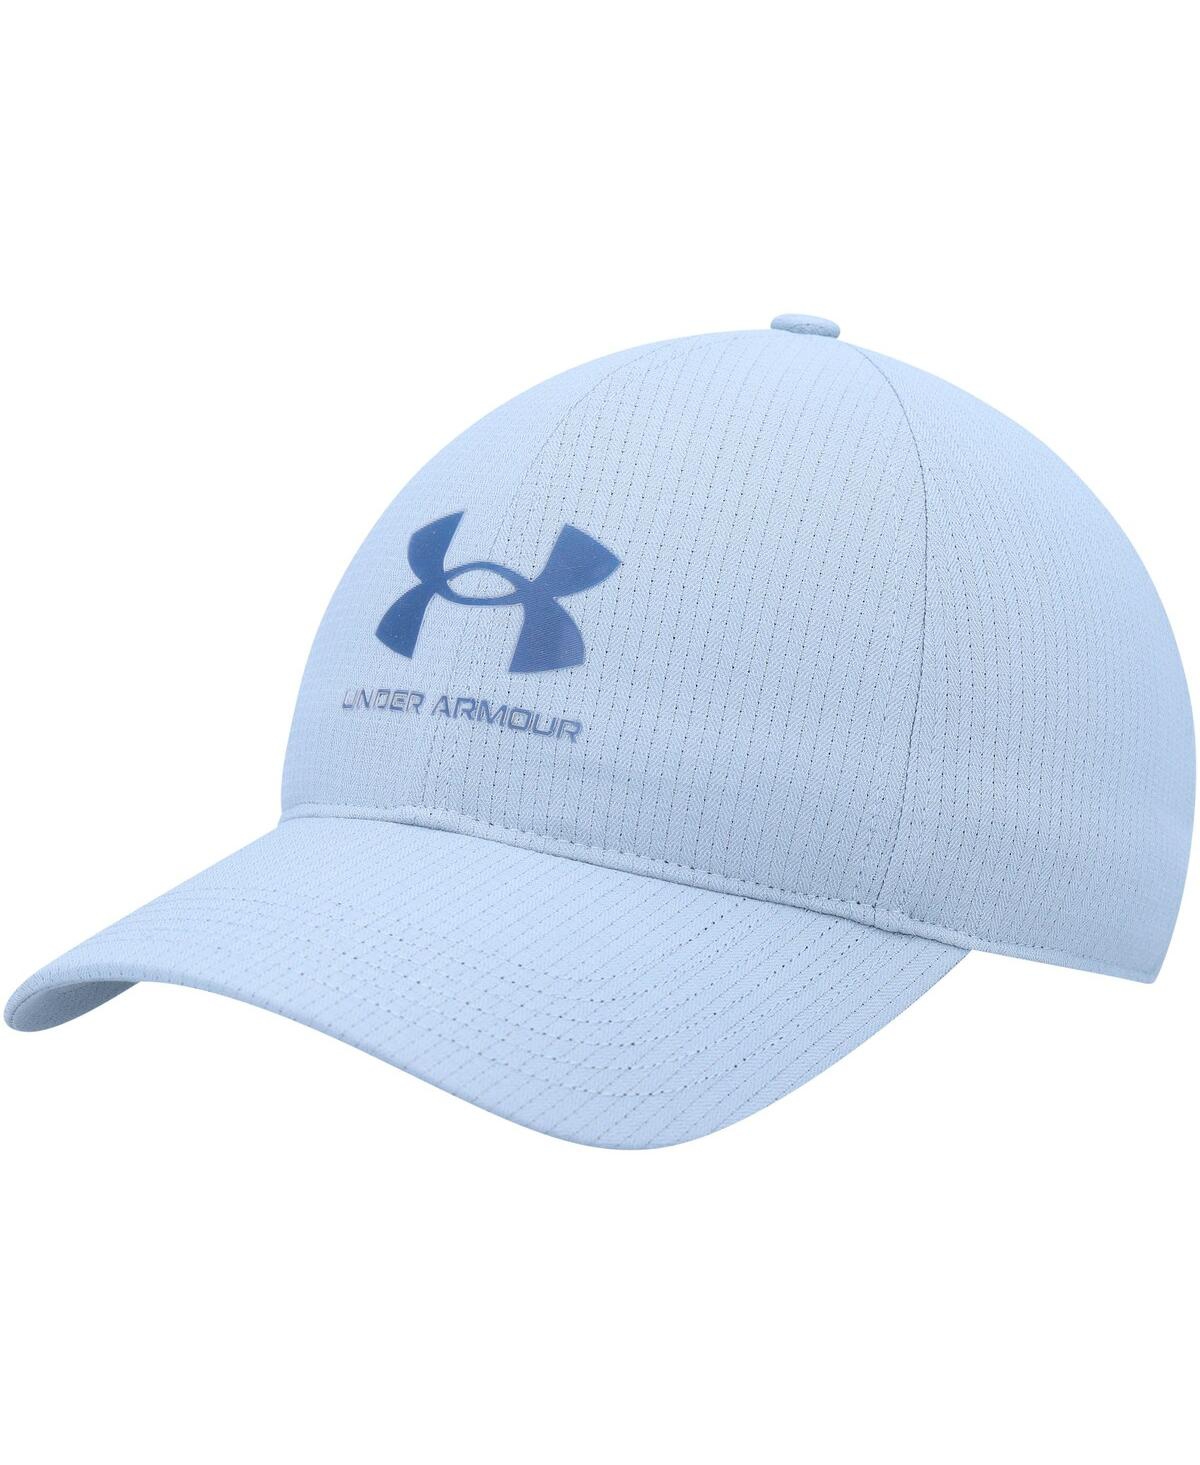 Men's Under Armour Light Blue Performance Adjustable Hat - Light Blue